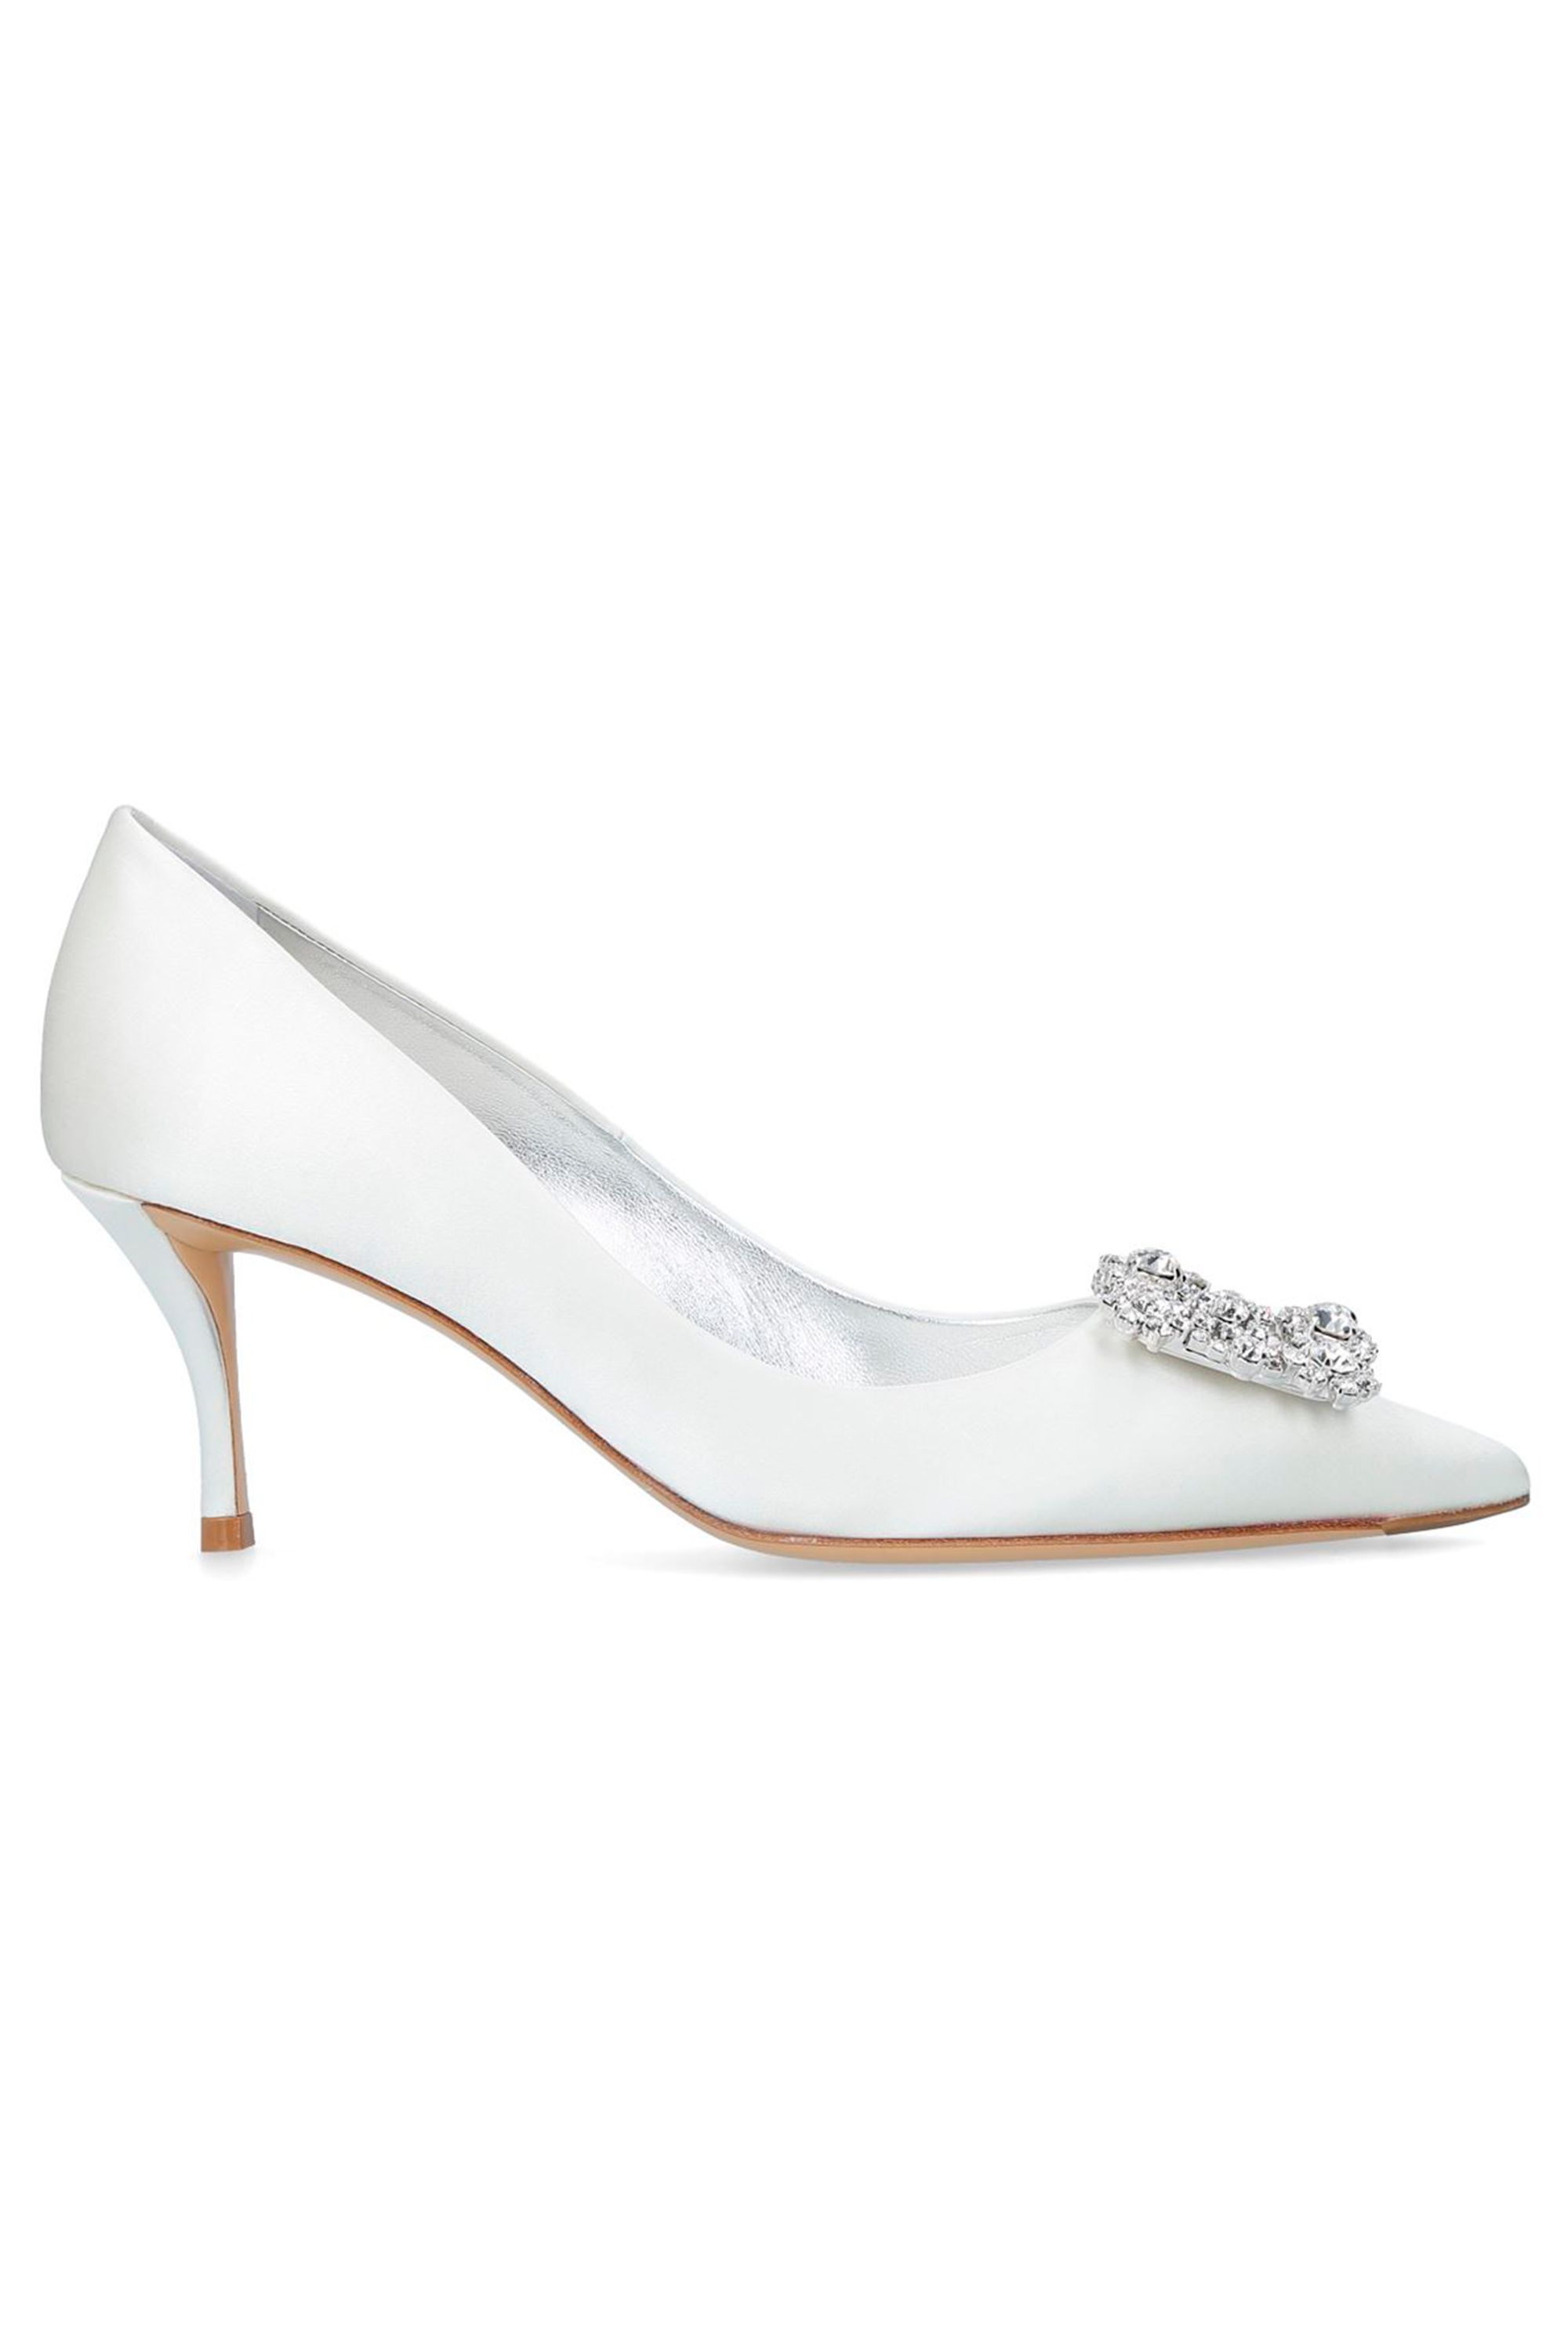 roger vivier white wedding shoes